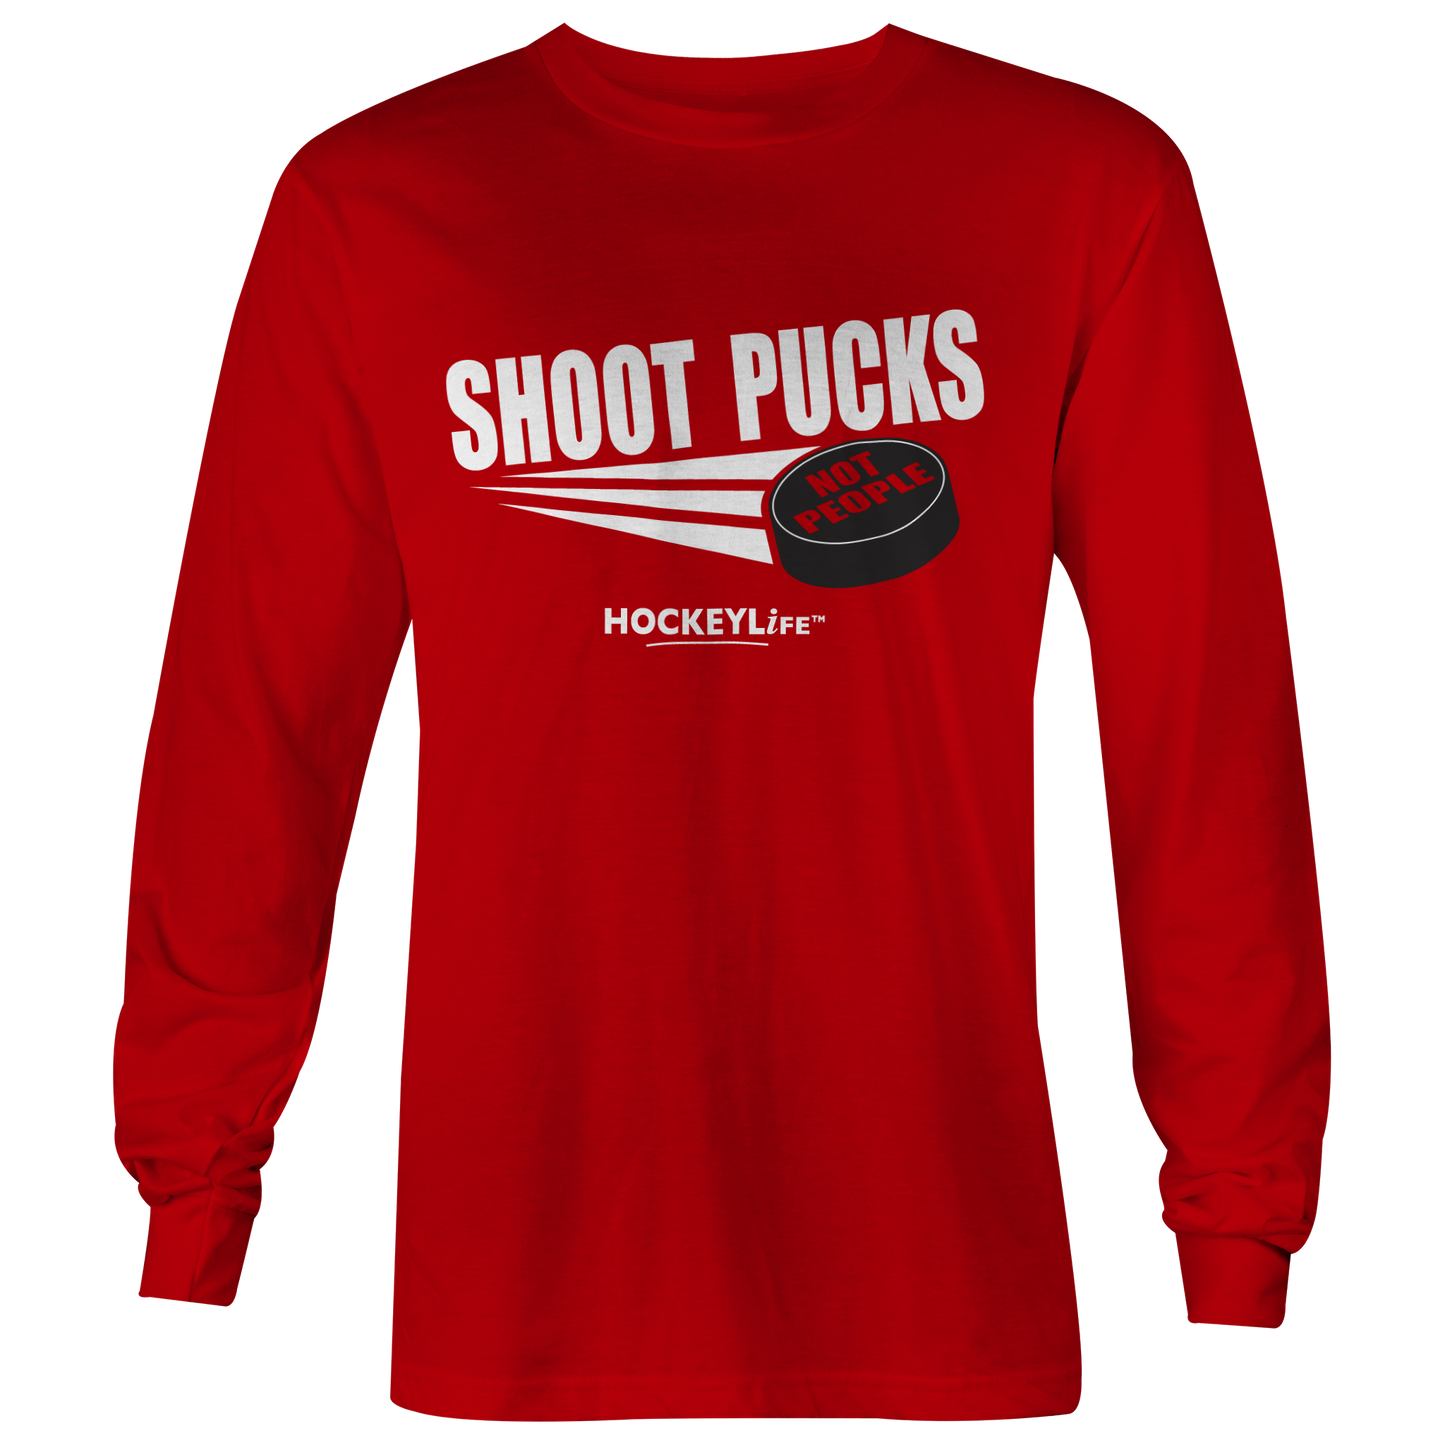 Shoot Pucks Not People Long Sleeve Tee Shirt (Red)